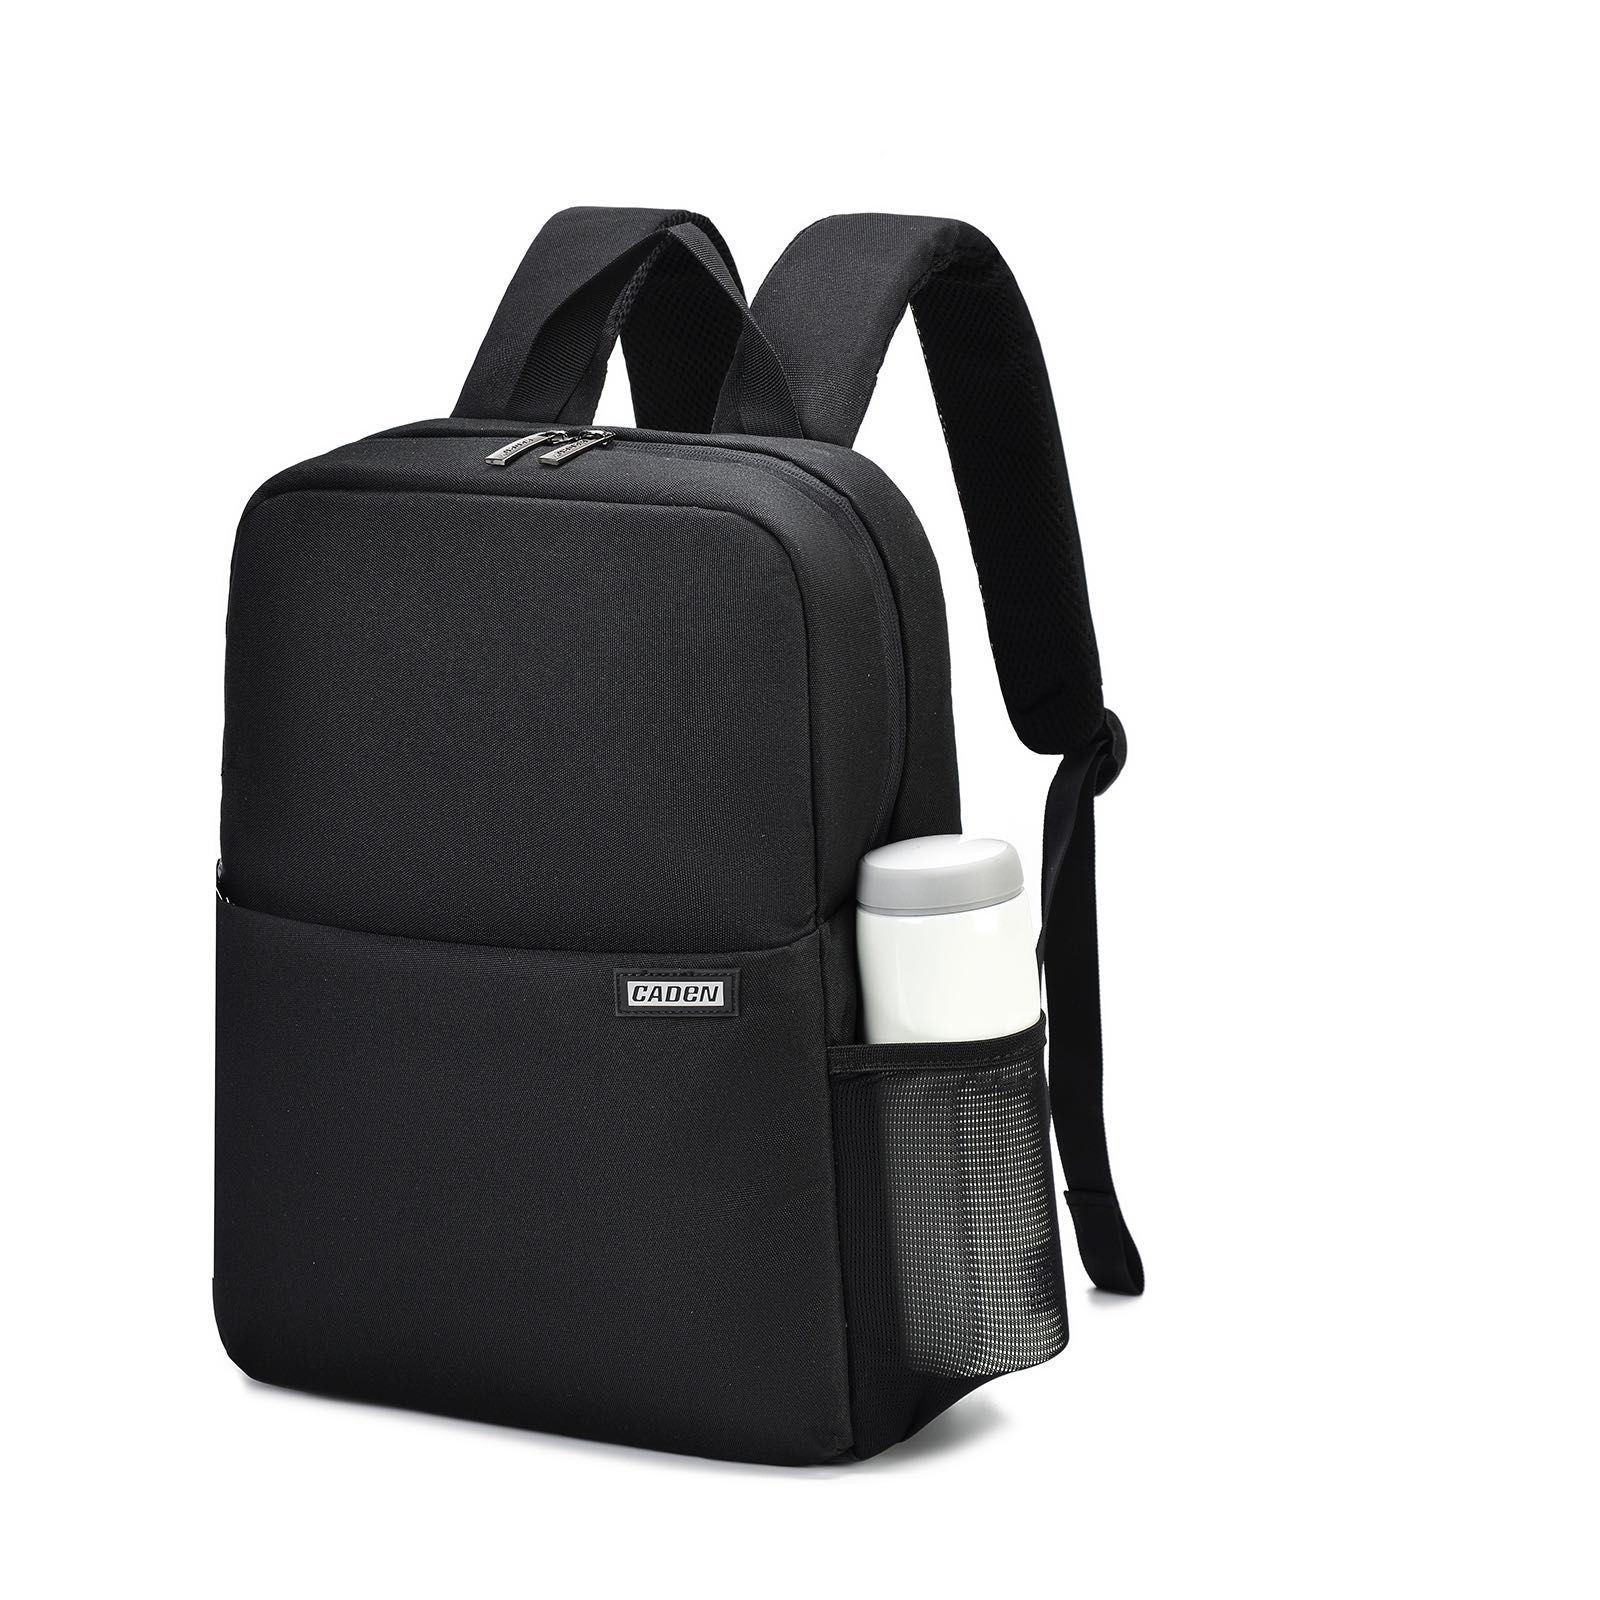 Фоторюкзак Caden L4 для фотоапарата/фотокамери/рюкзак для фототехніки